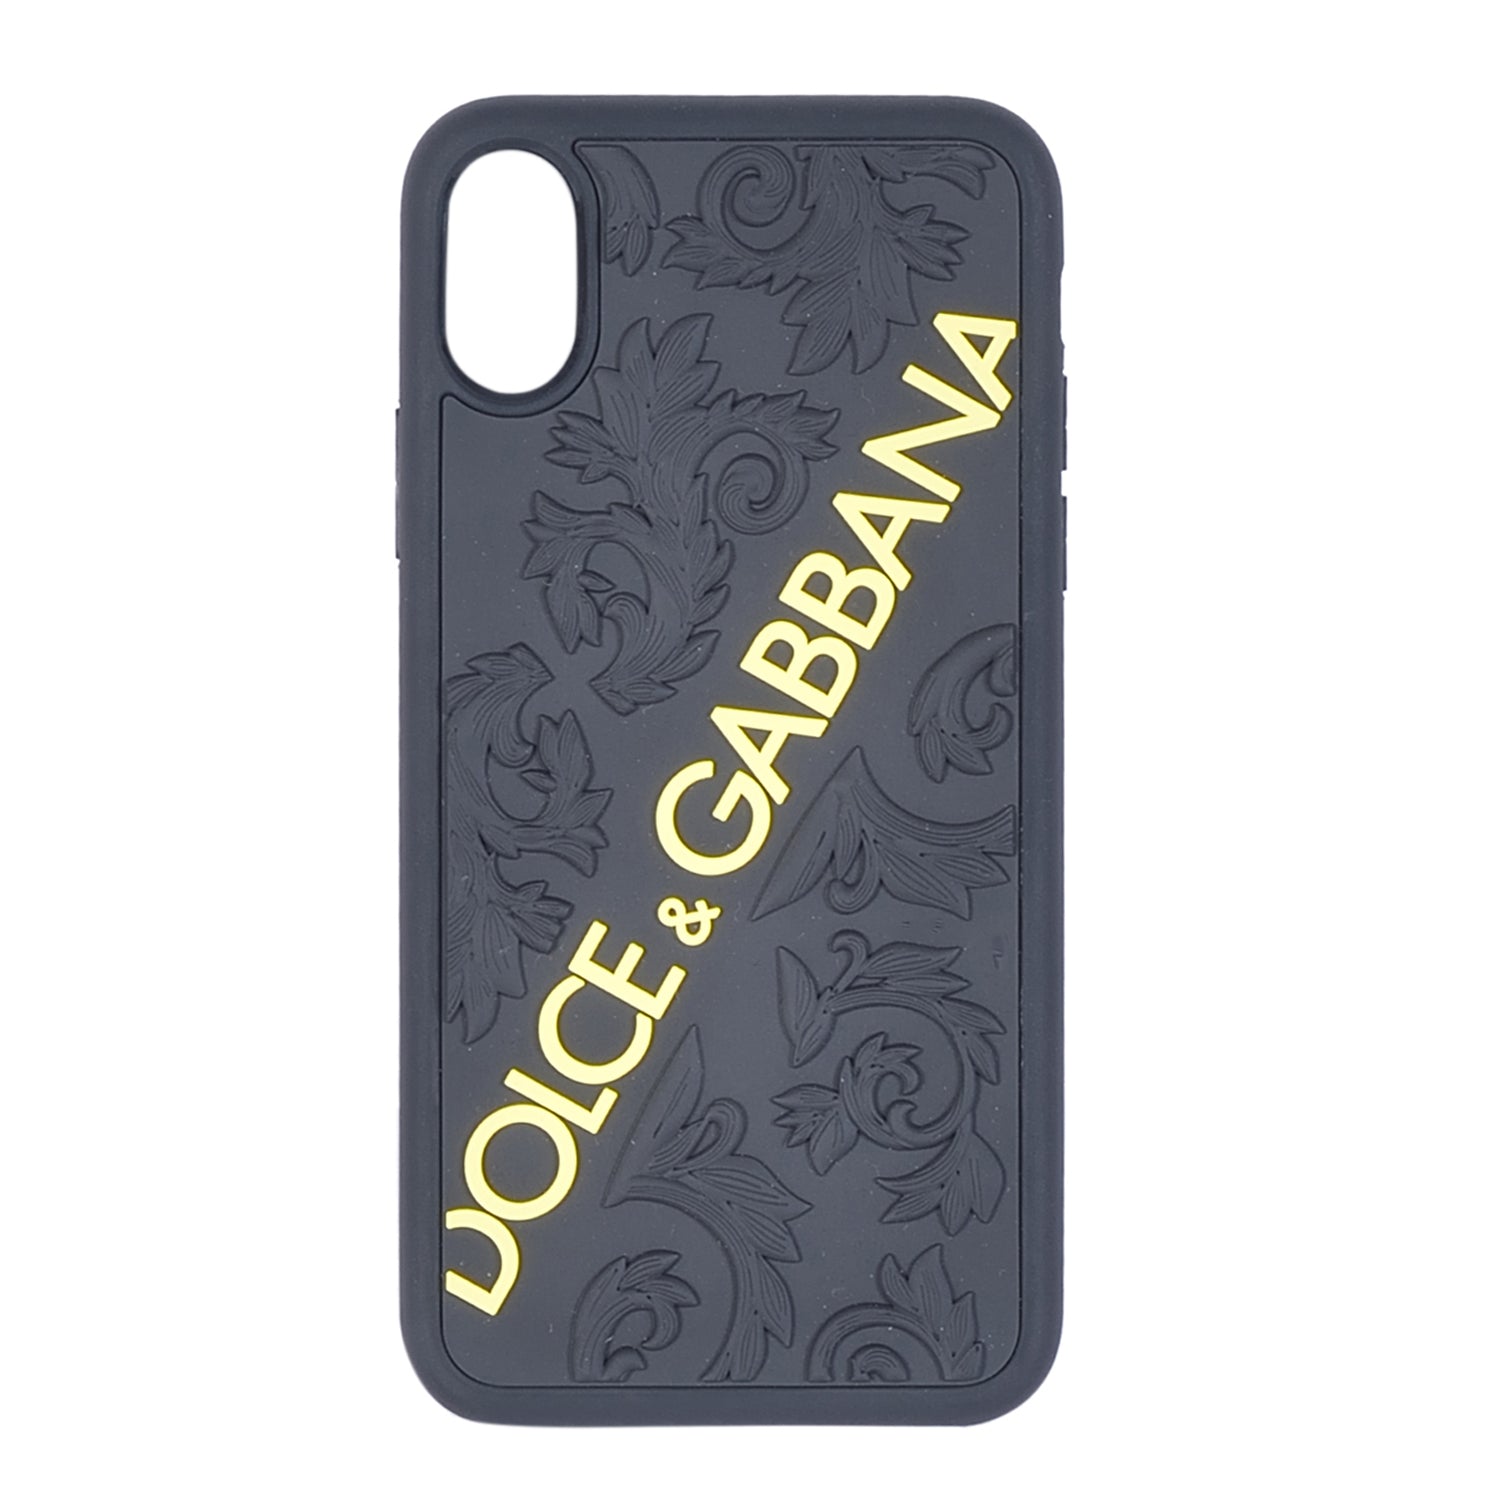 DOLCE & GABBANA Black iPhone X Cover